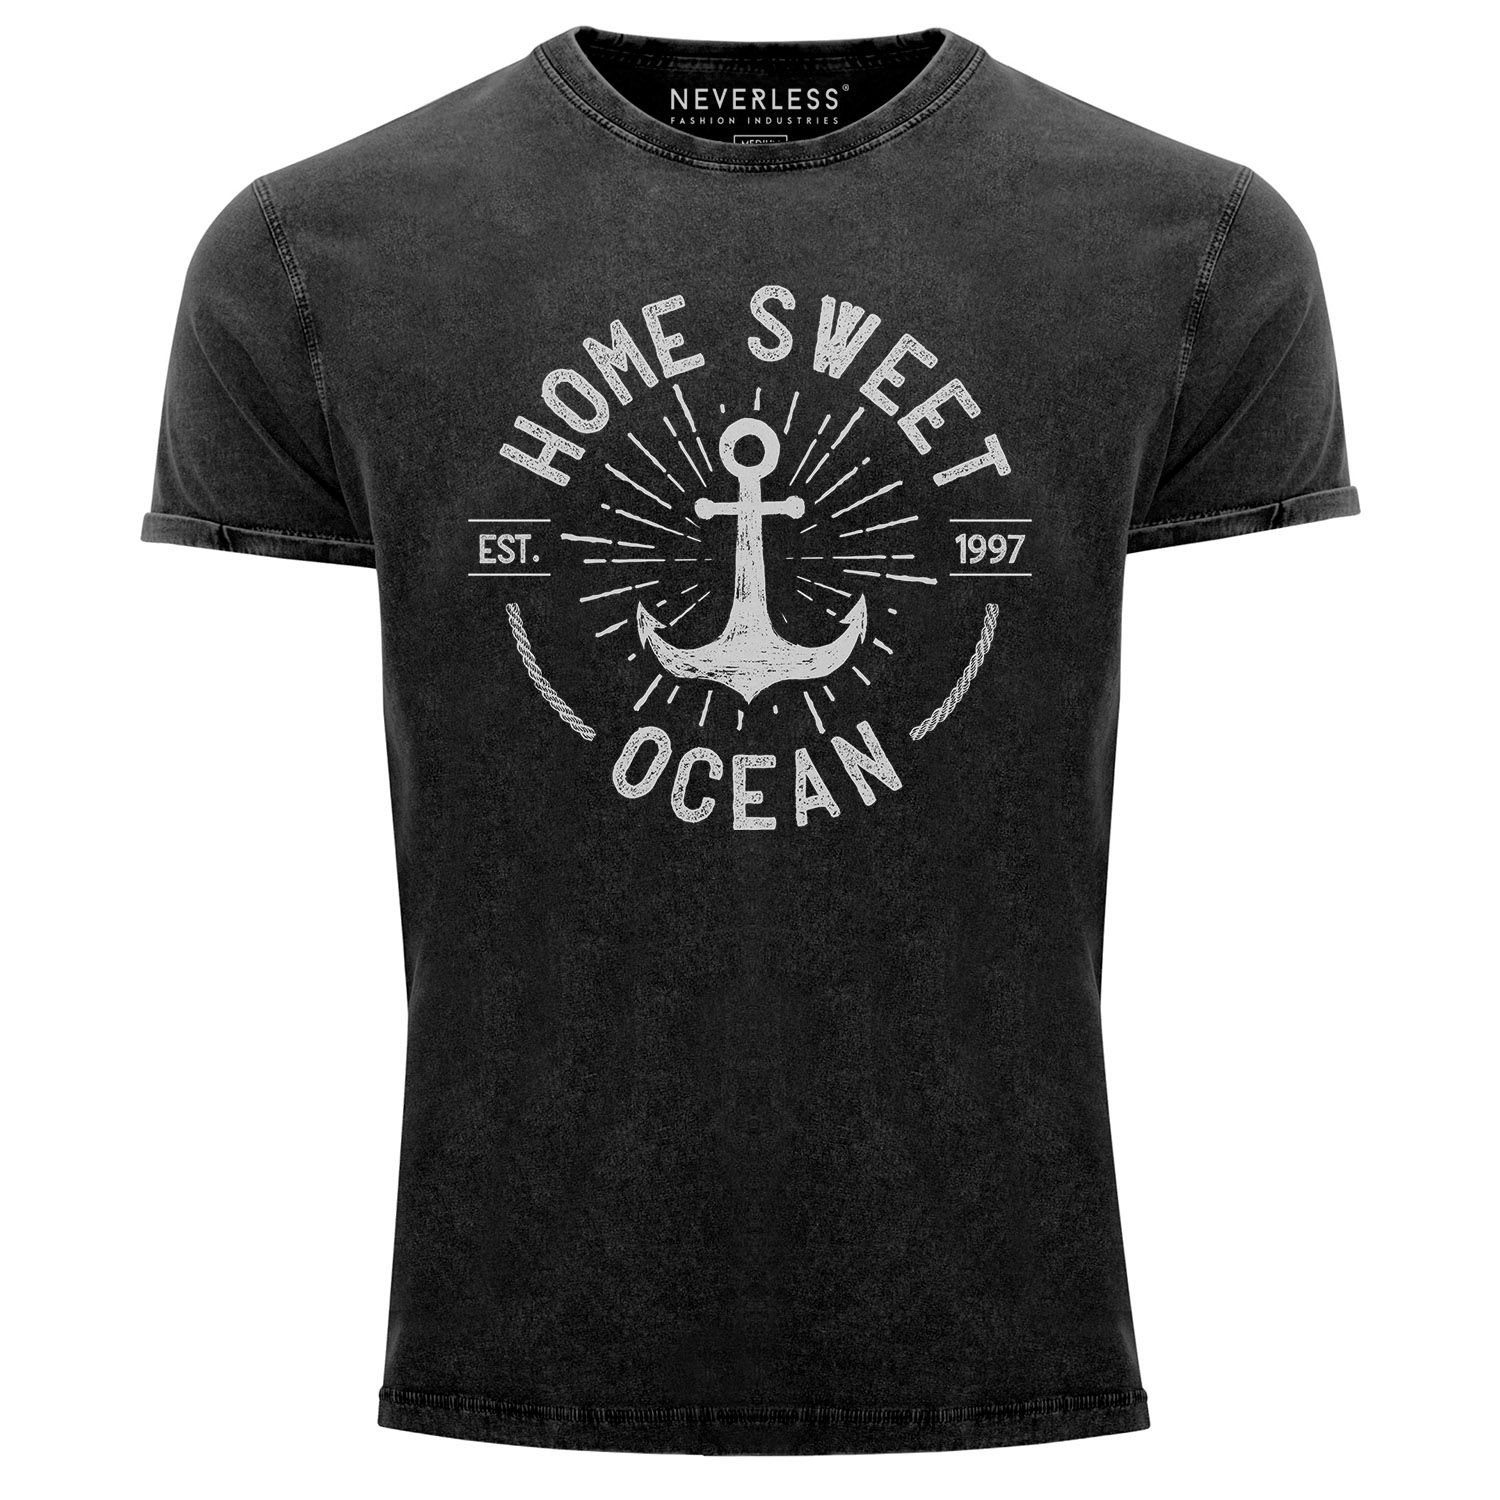 Neverless Print-Shirt Neverless® Herren T-Shirt Vintage Shirt Printshirt Anker Logo maritim Home Sweet Ocean Schriftzug Fashion Streetstyle Aufdruck Used Look Slim Fit mit Print